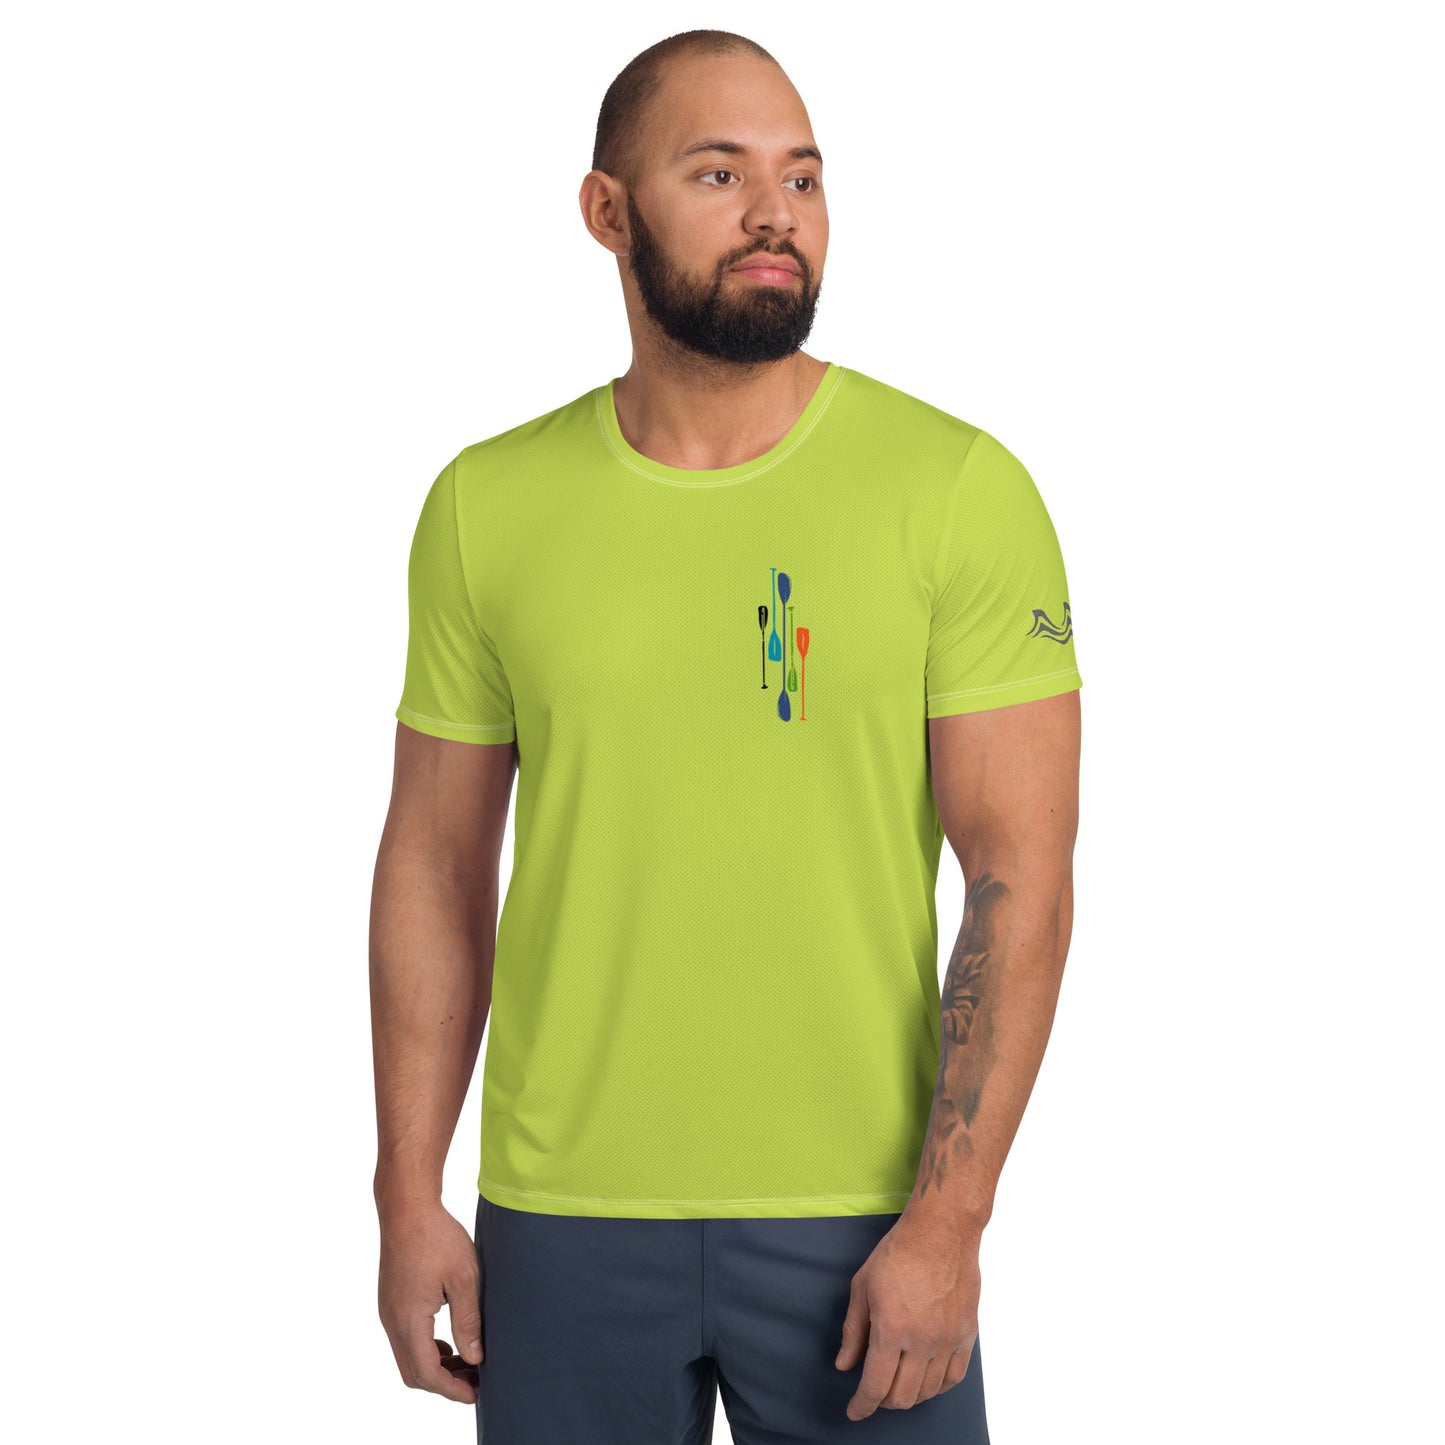 Paddles Men's Hi-Viz Green Athletic T-shirt